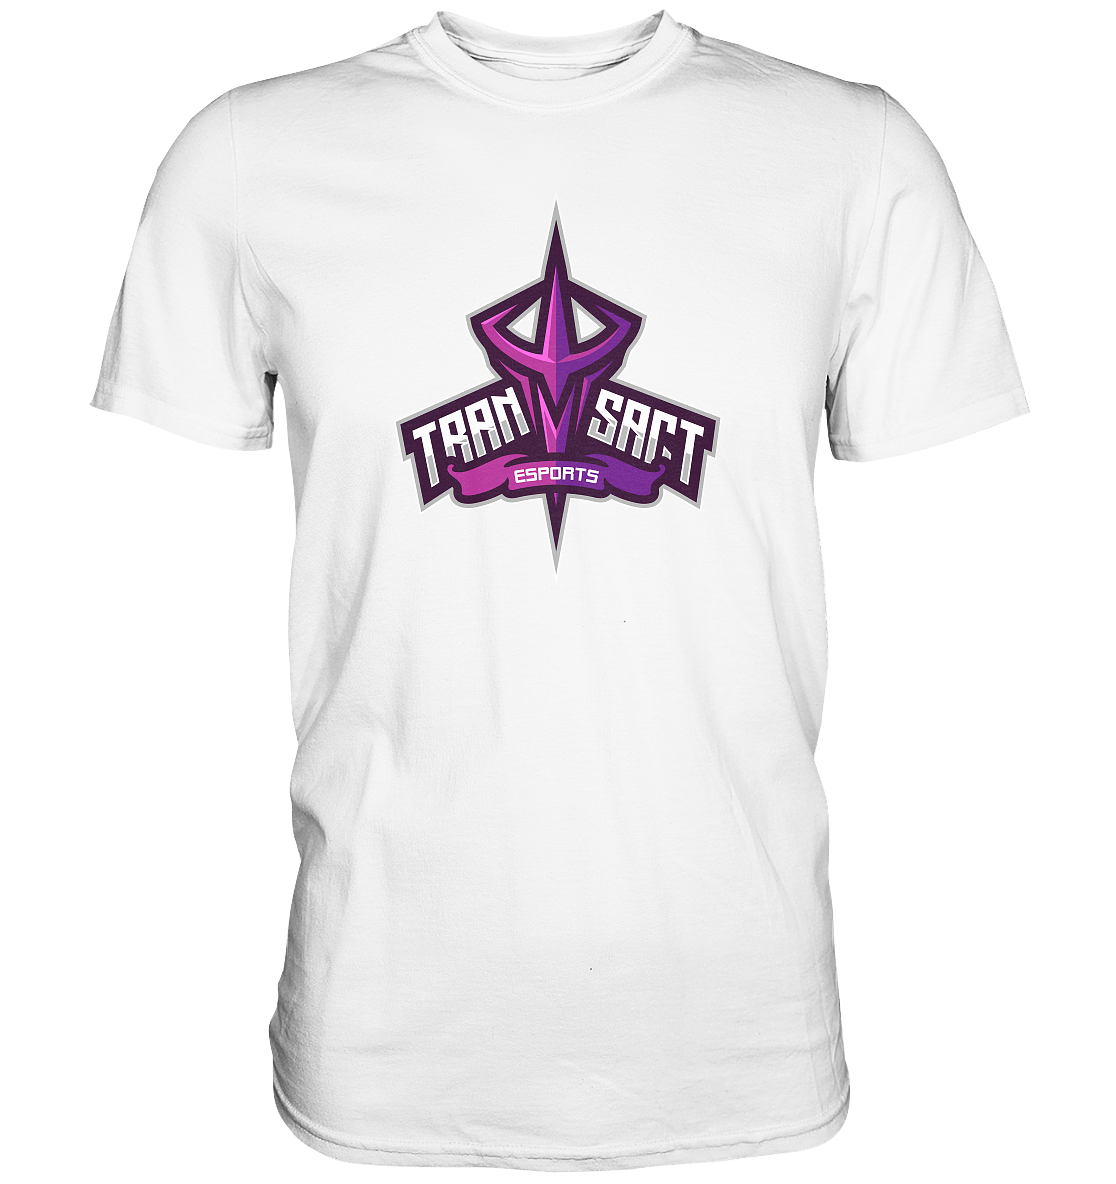 TRANSACT ESPORTS - Basic Shirt